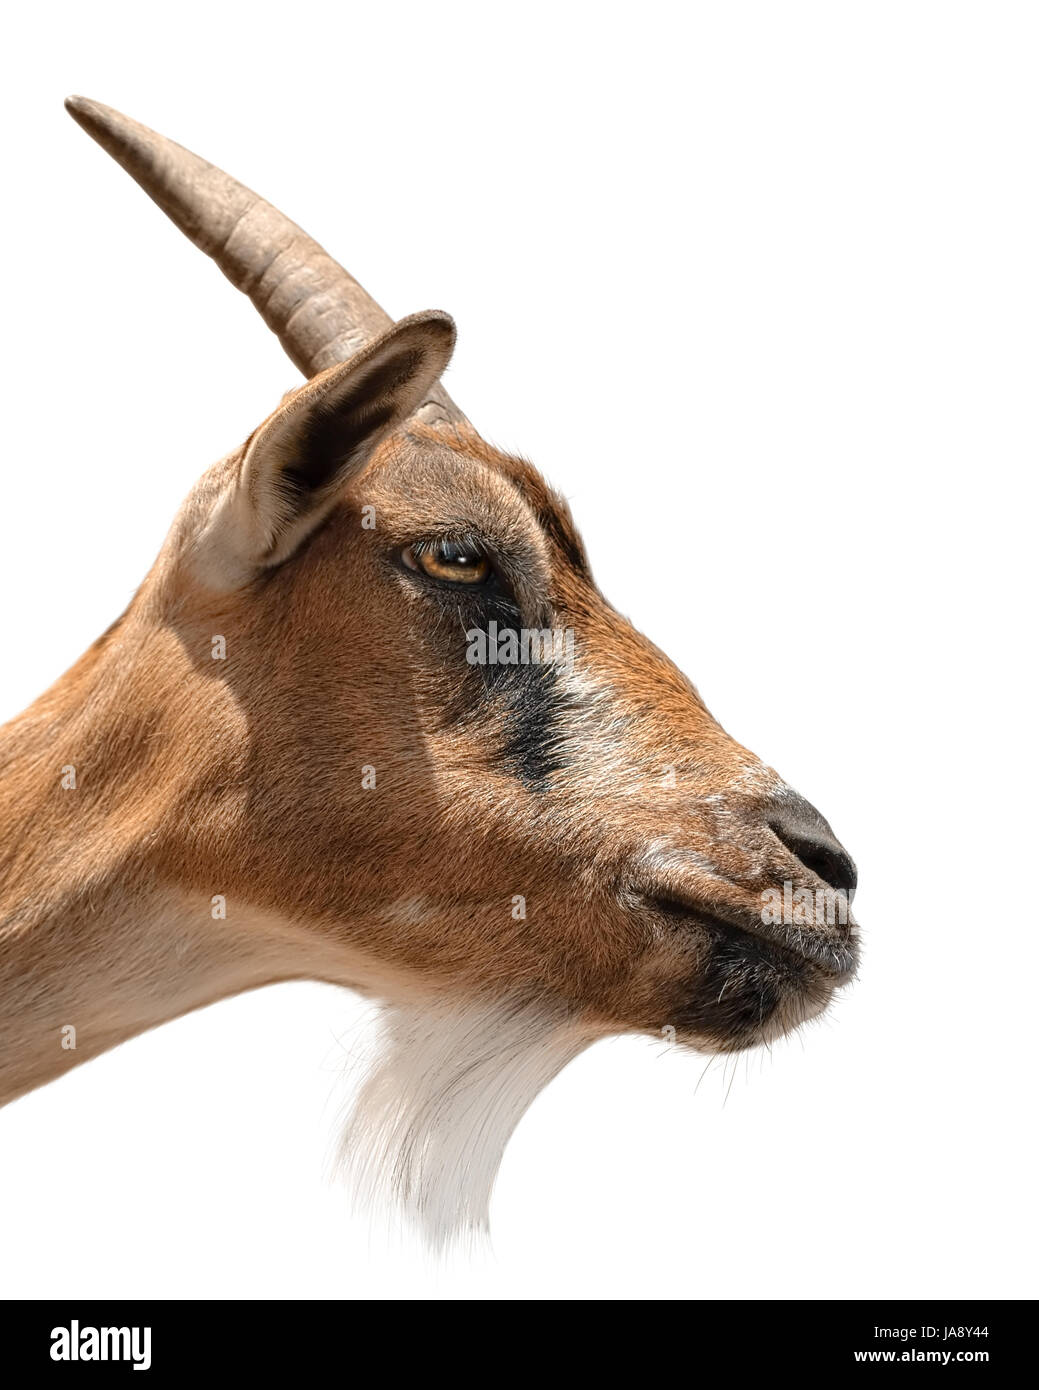 animal, mammal, fauna, portrait, goat, animal world, farm animal, neck, Stock Photo